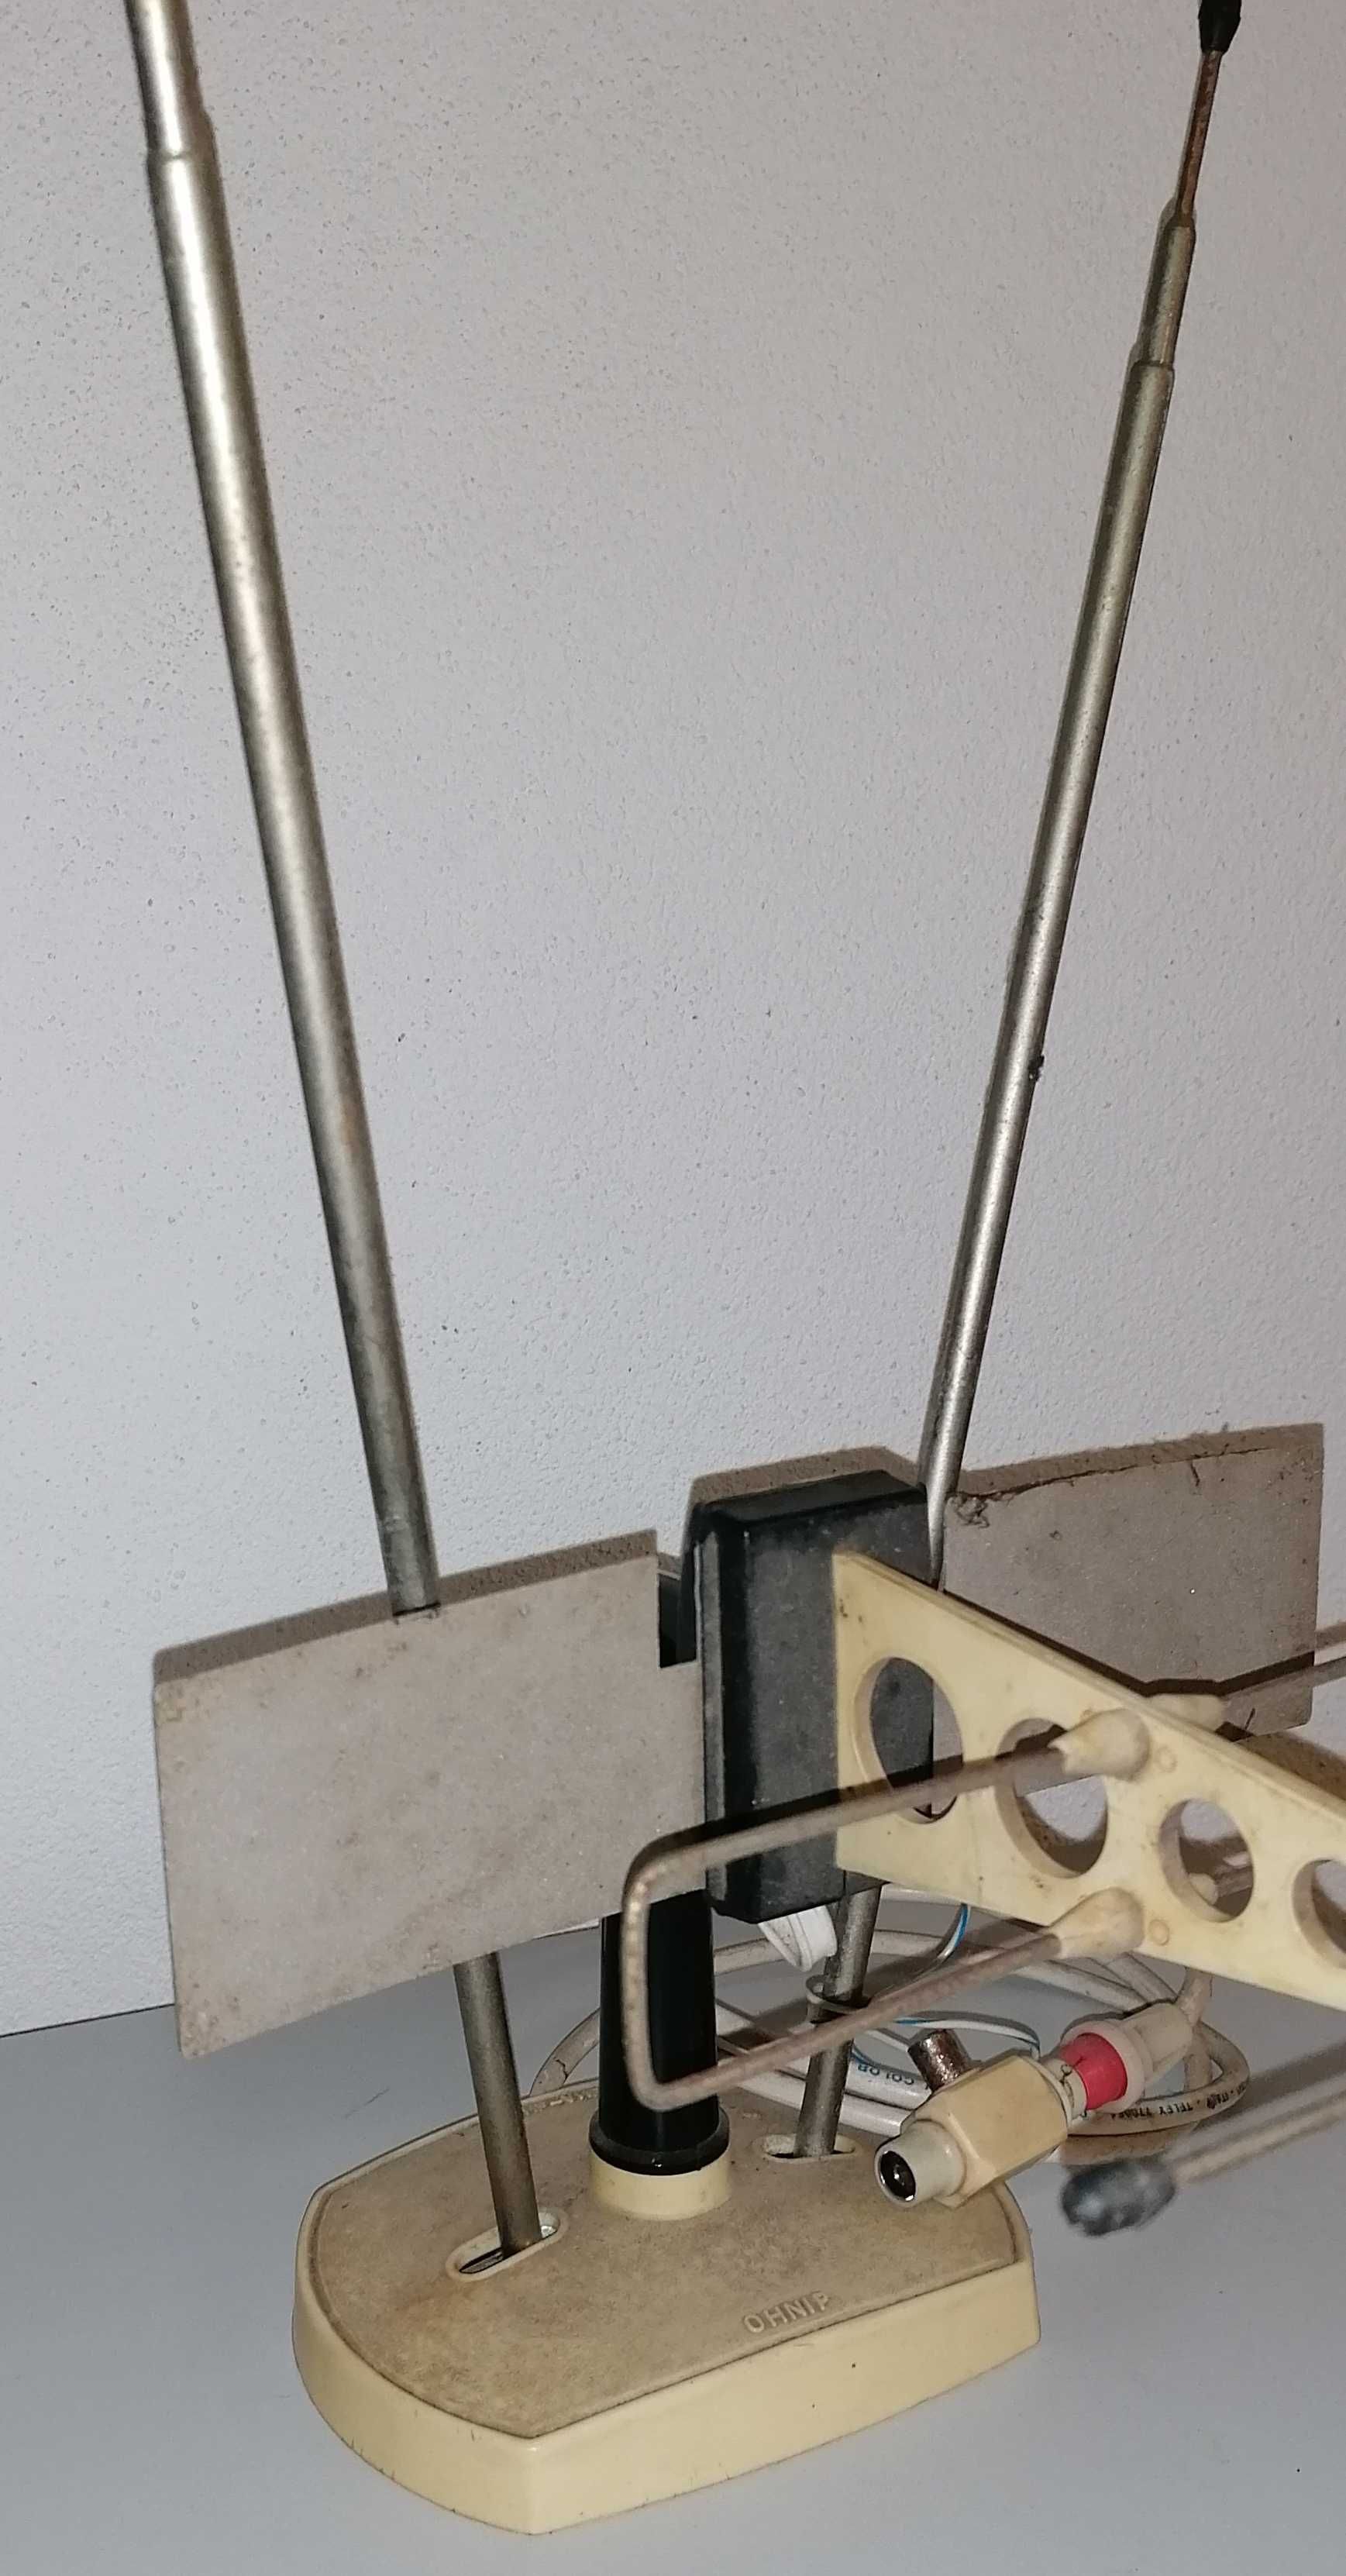 Antena interior, portátil, vintage